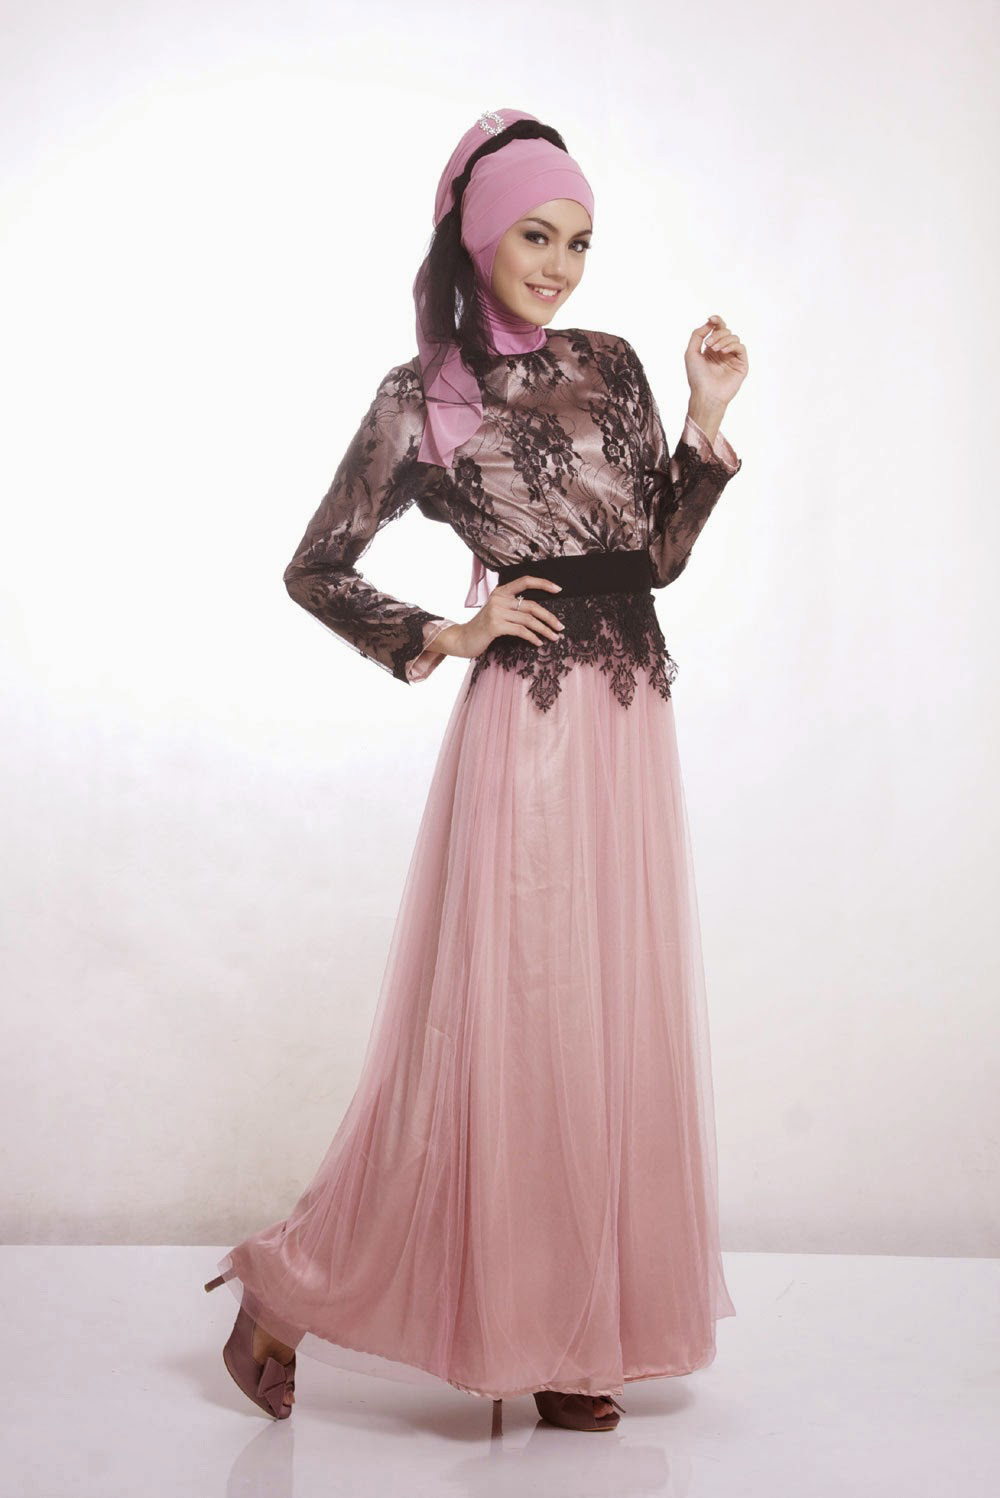 Koleksi Dan Hunting Model Hijab Terbaru Yang Trendy Dan Syari Untuk